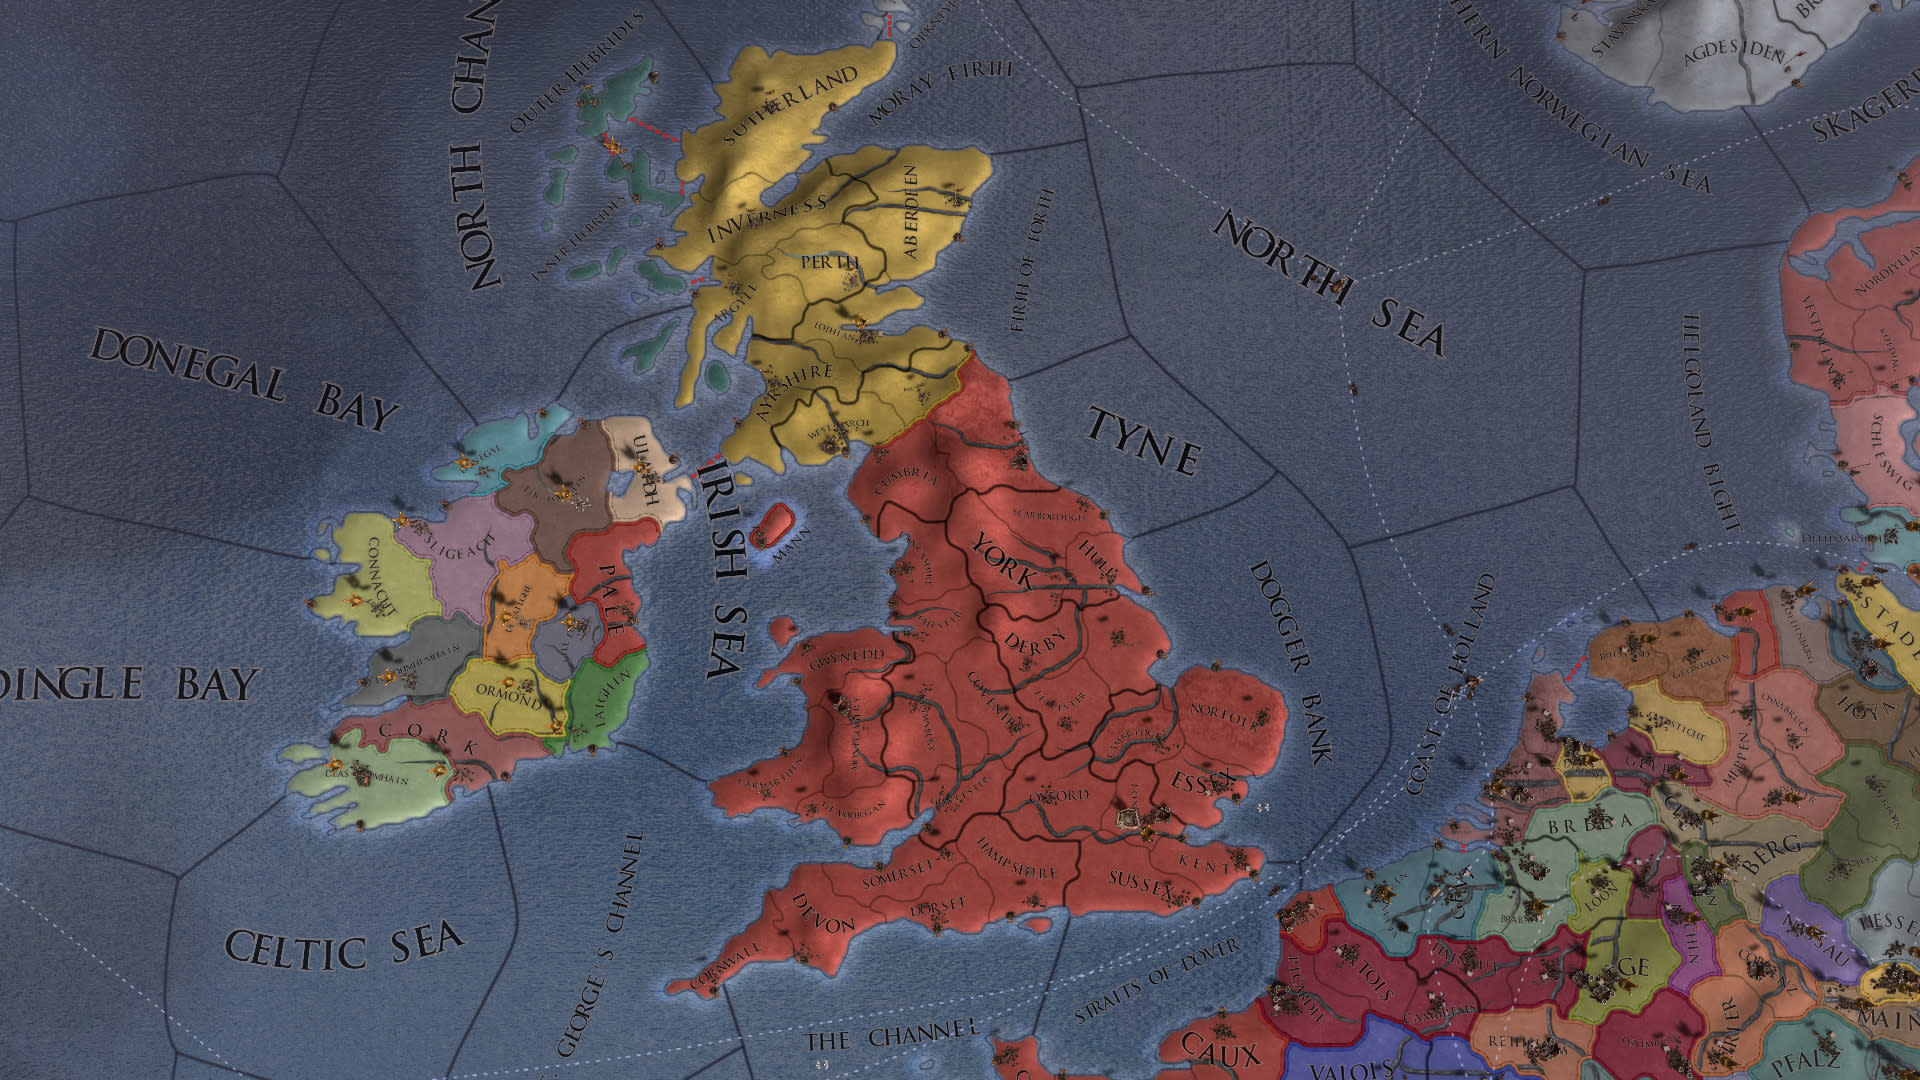 Europa Universalis IV: Rule Britannia (screenshot 4)